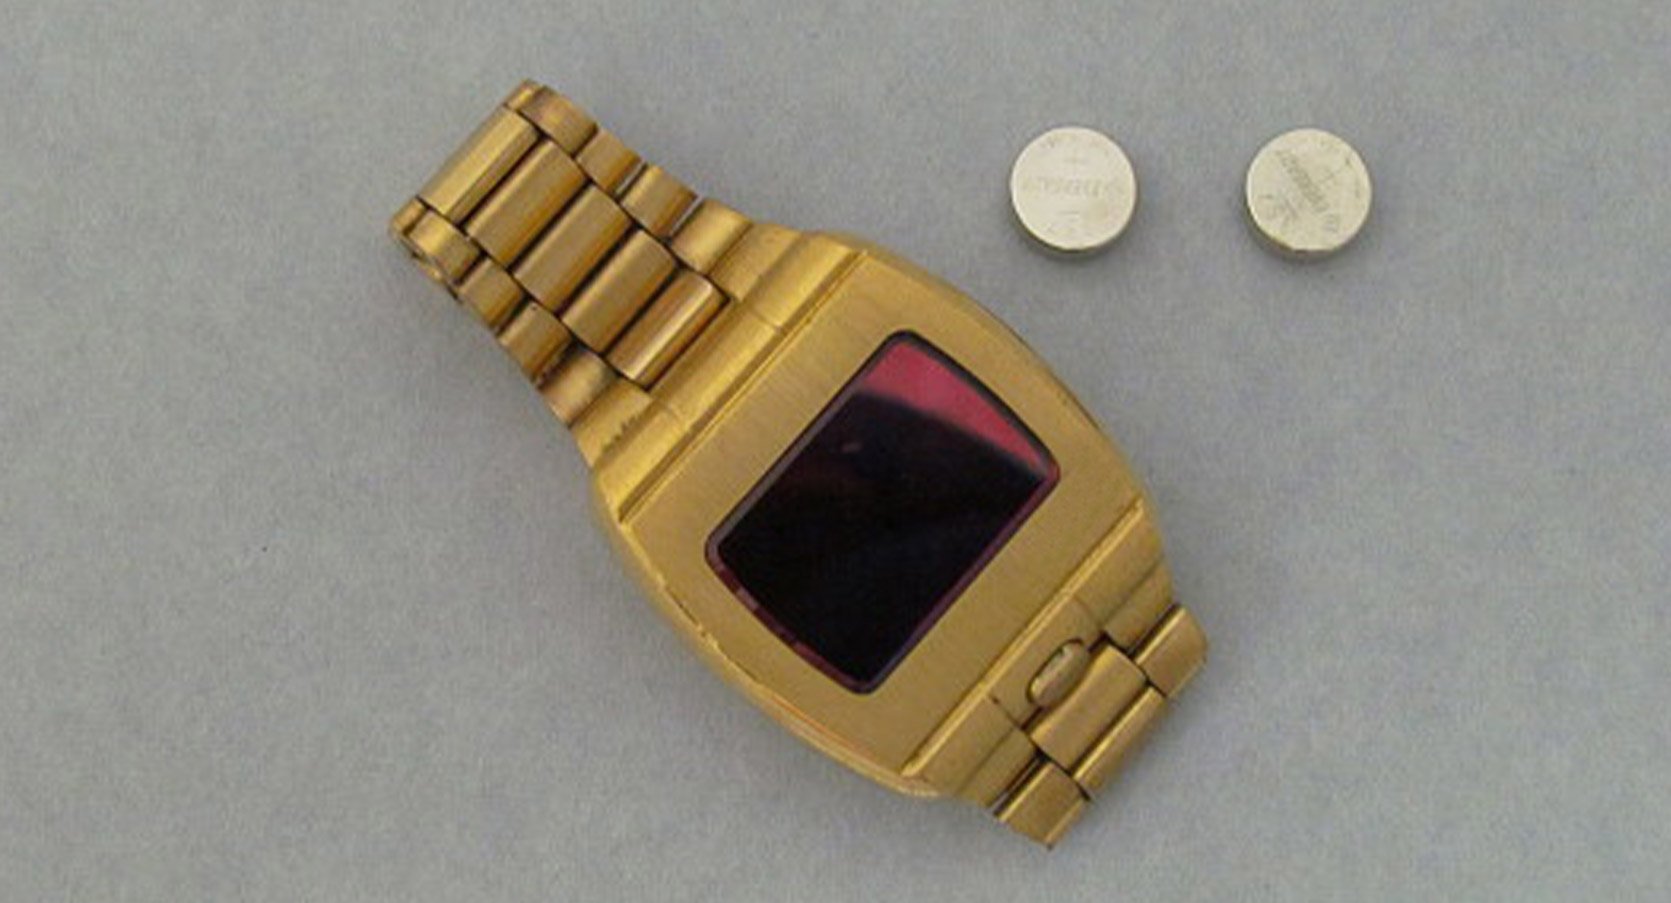 pulsar LED watch history: the prototype